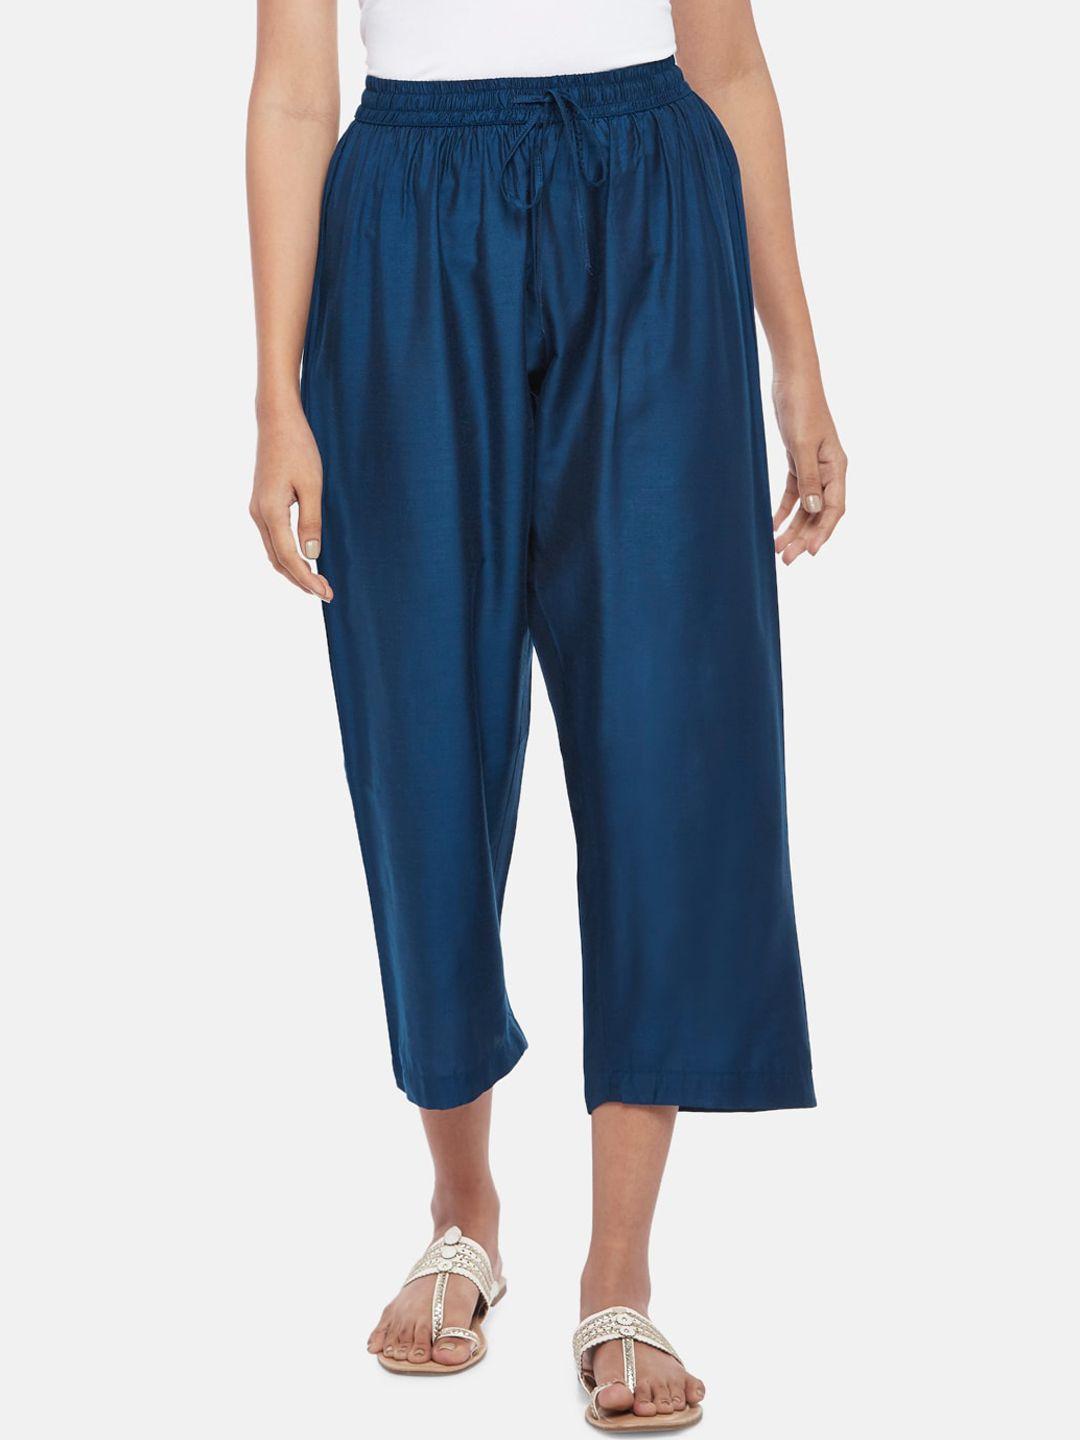 rangmanch by pantaloons women blue culottes trousers